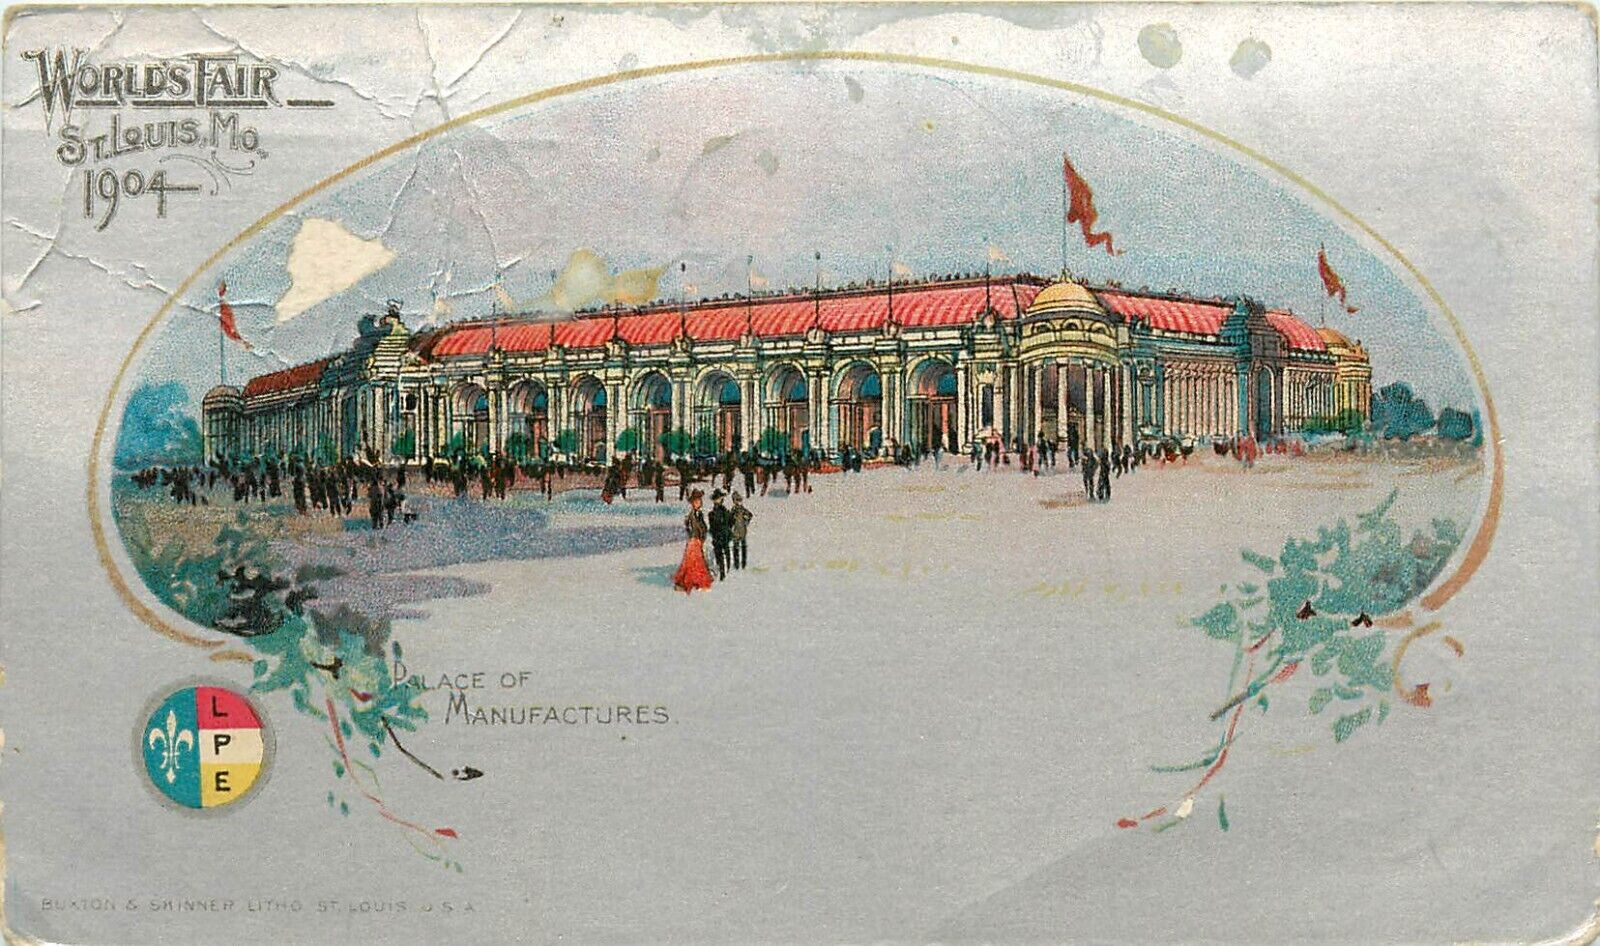 1904 Worlds Fair St Louis Missouri MO pm 1904 Palace of Manufacturers Postcard